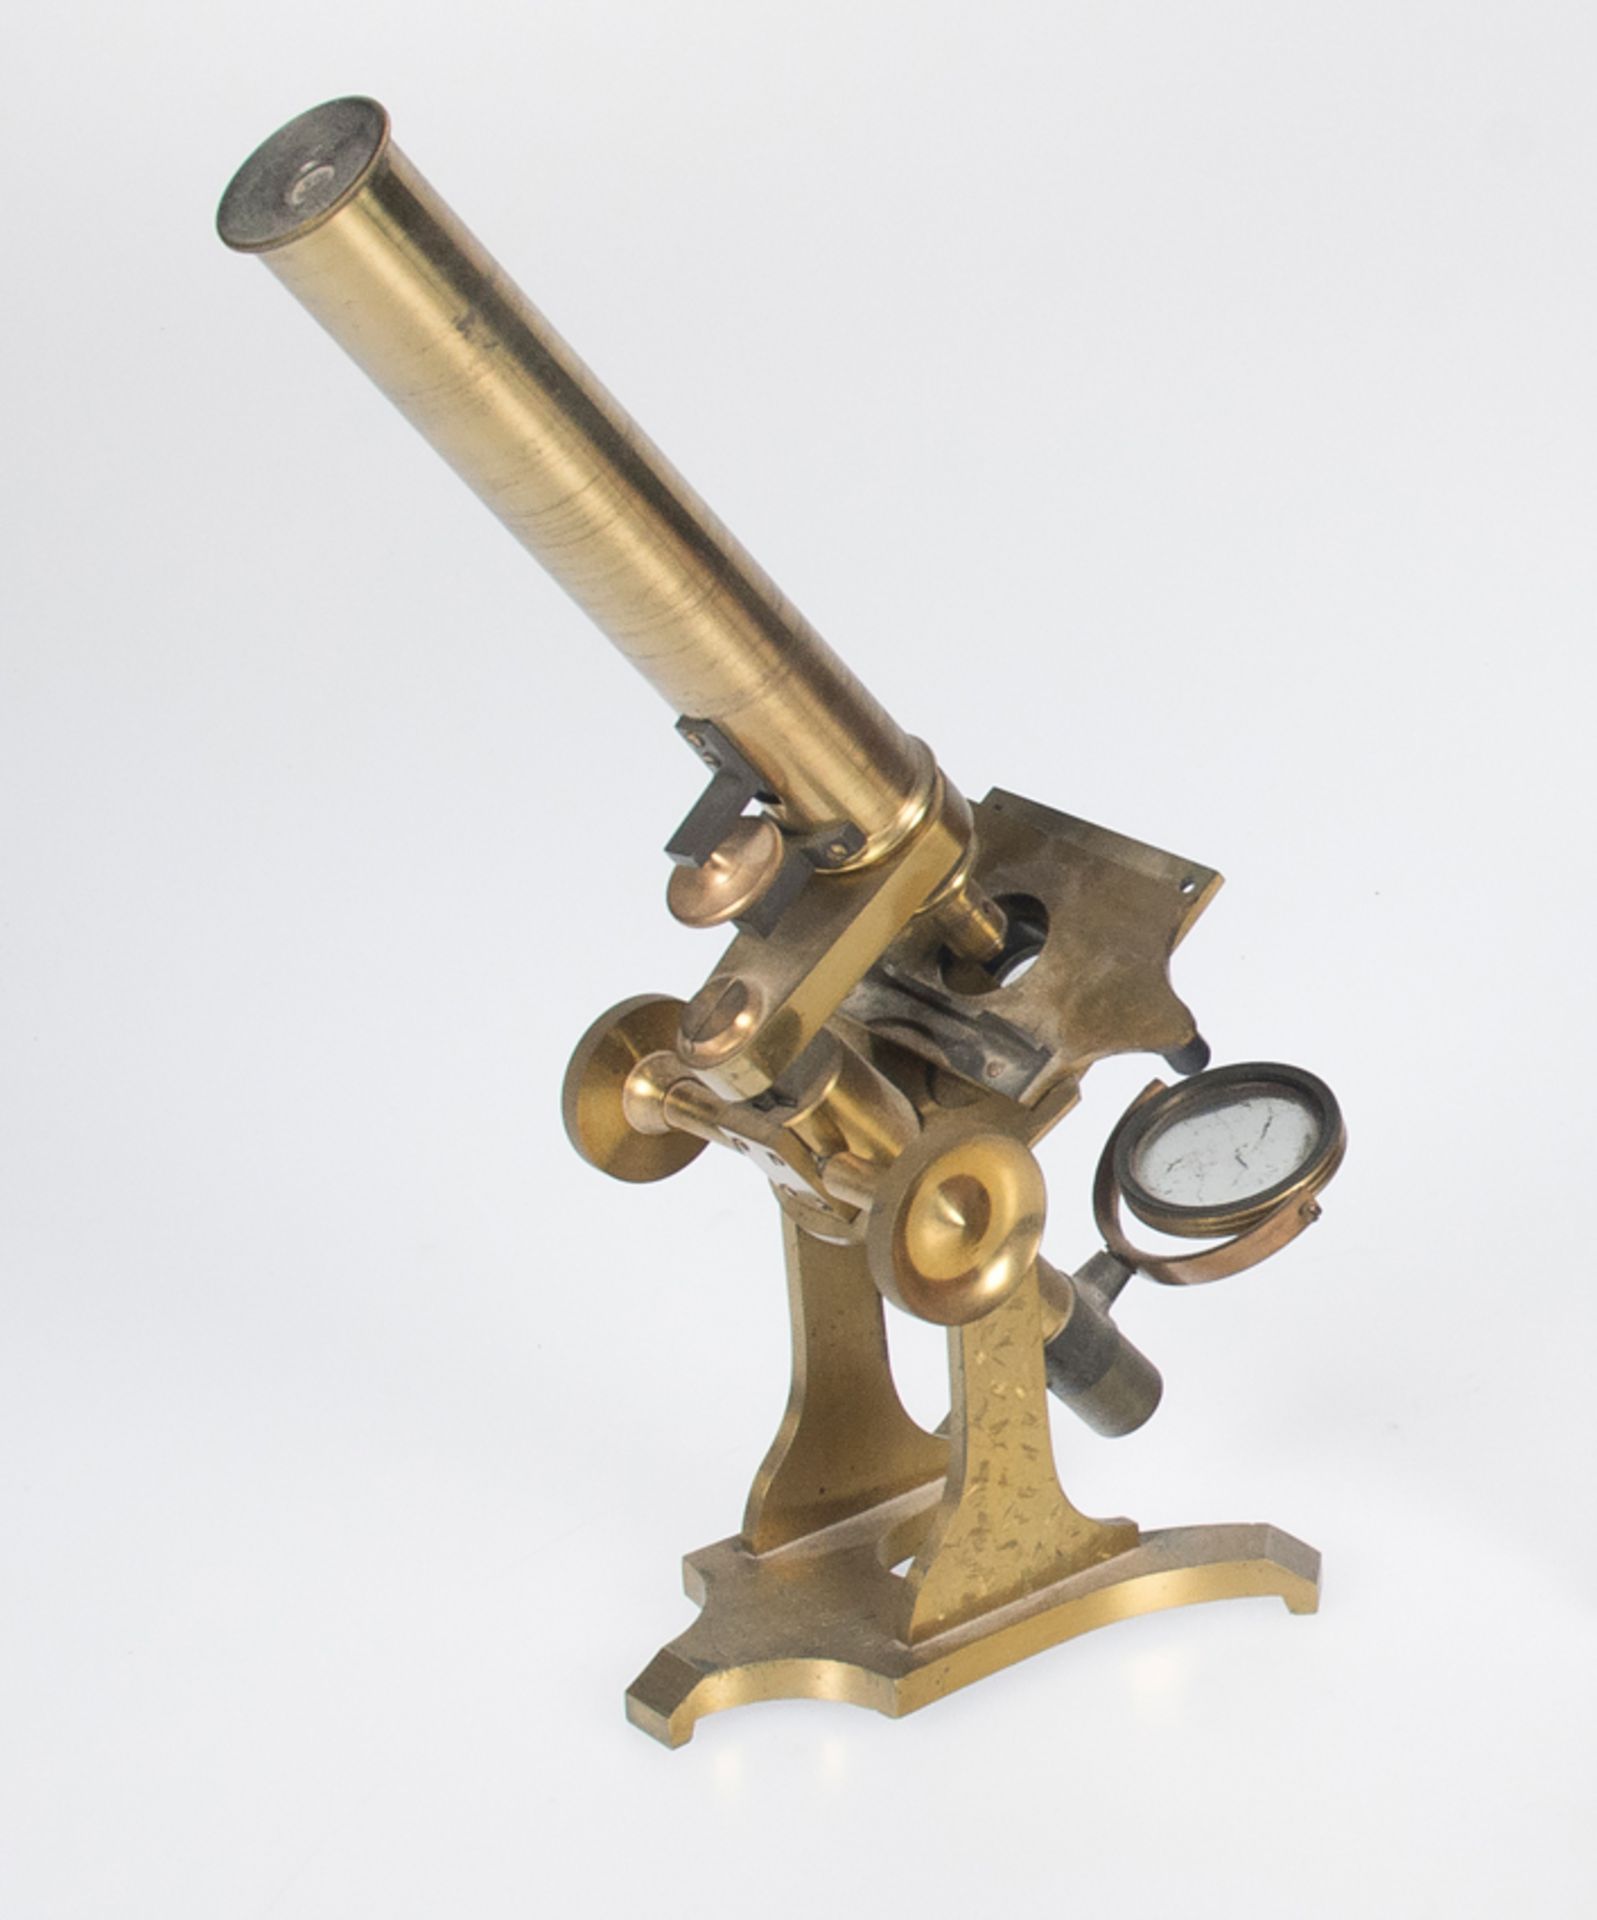 Microscope. J. H. Steward. London. England. 19th century. - Image 3 of 14